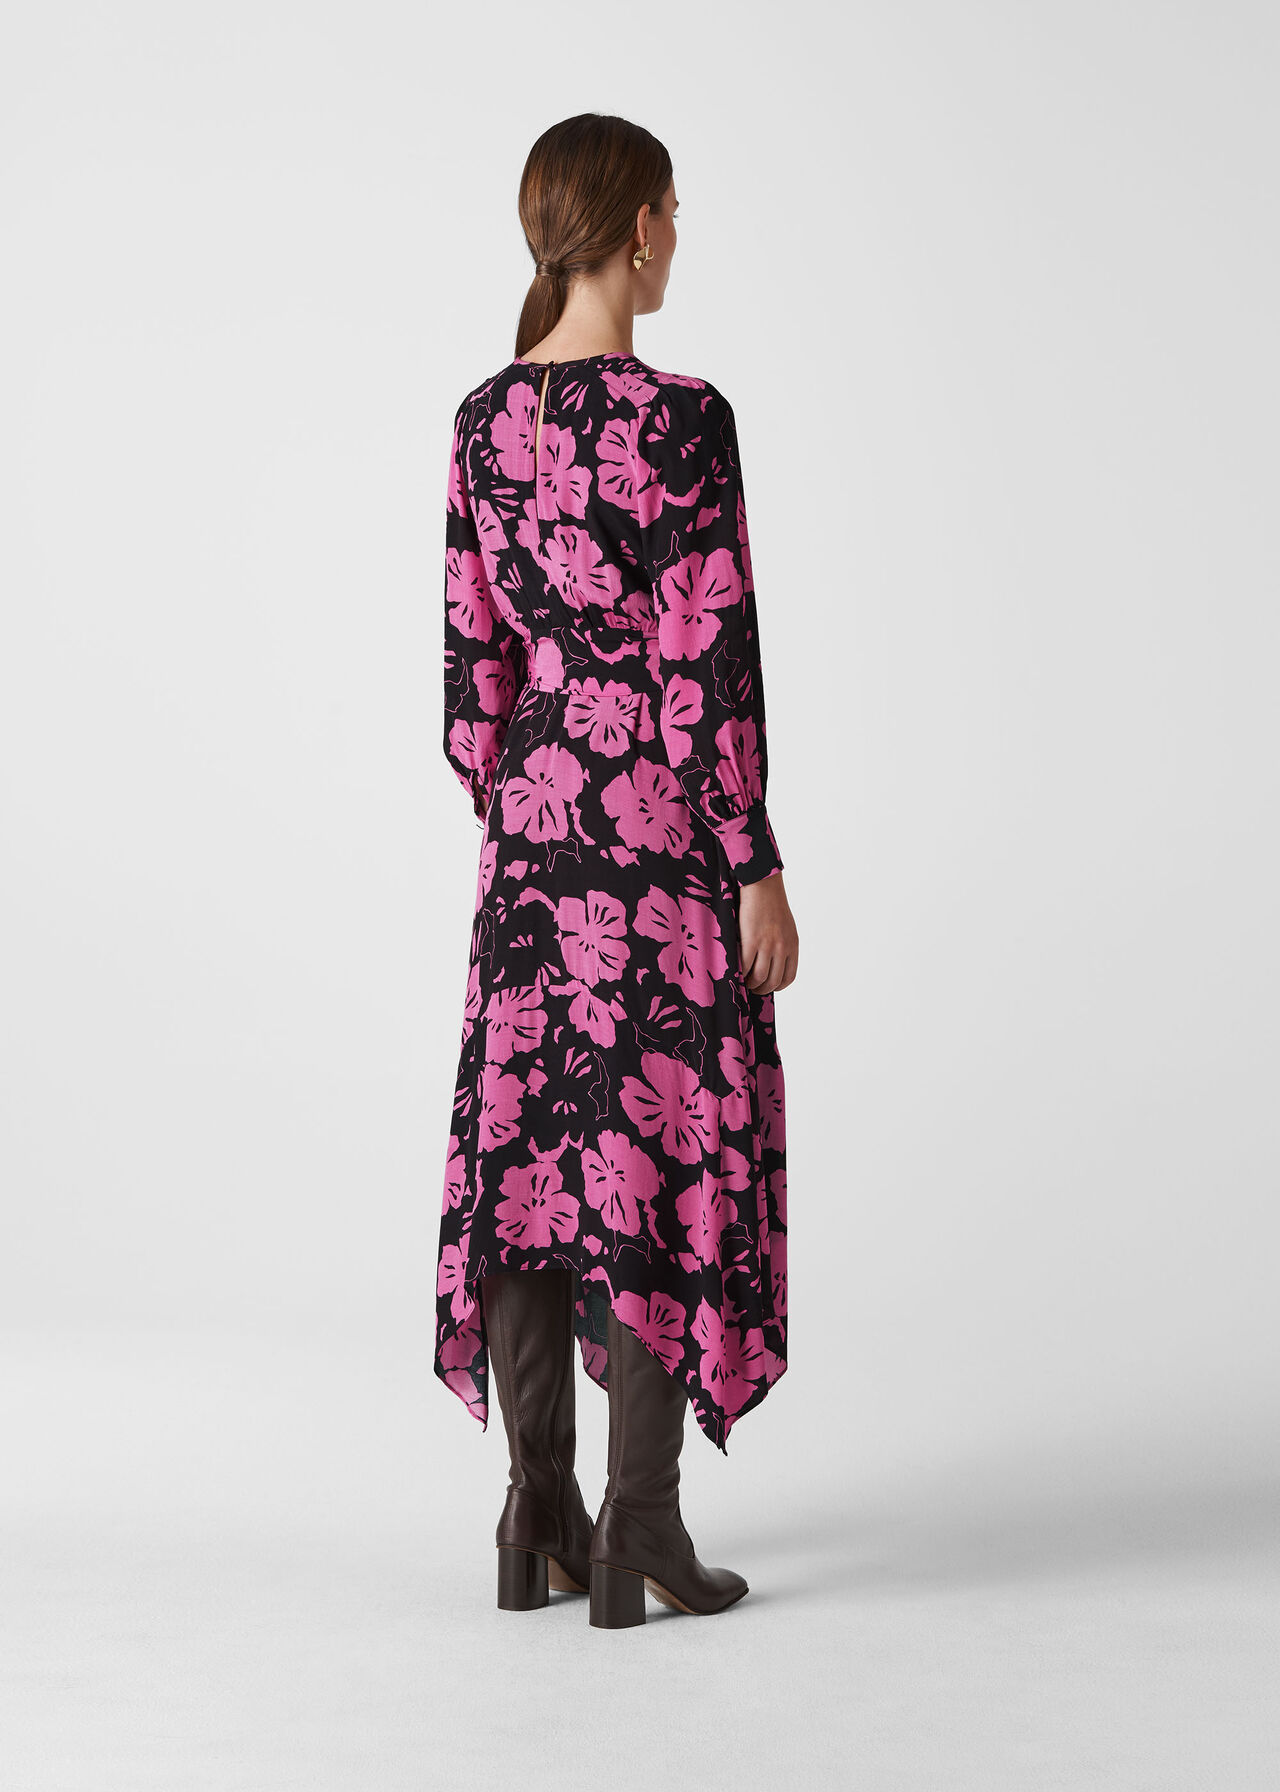 Ari Hibiscus Belted Dress Pink/Multi